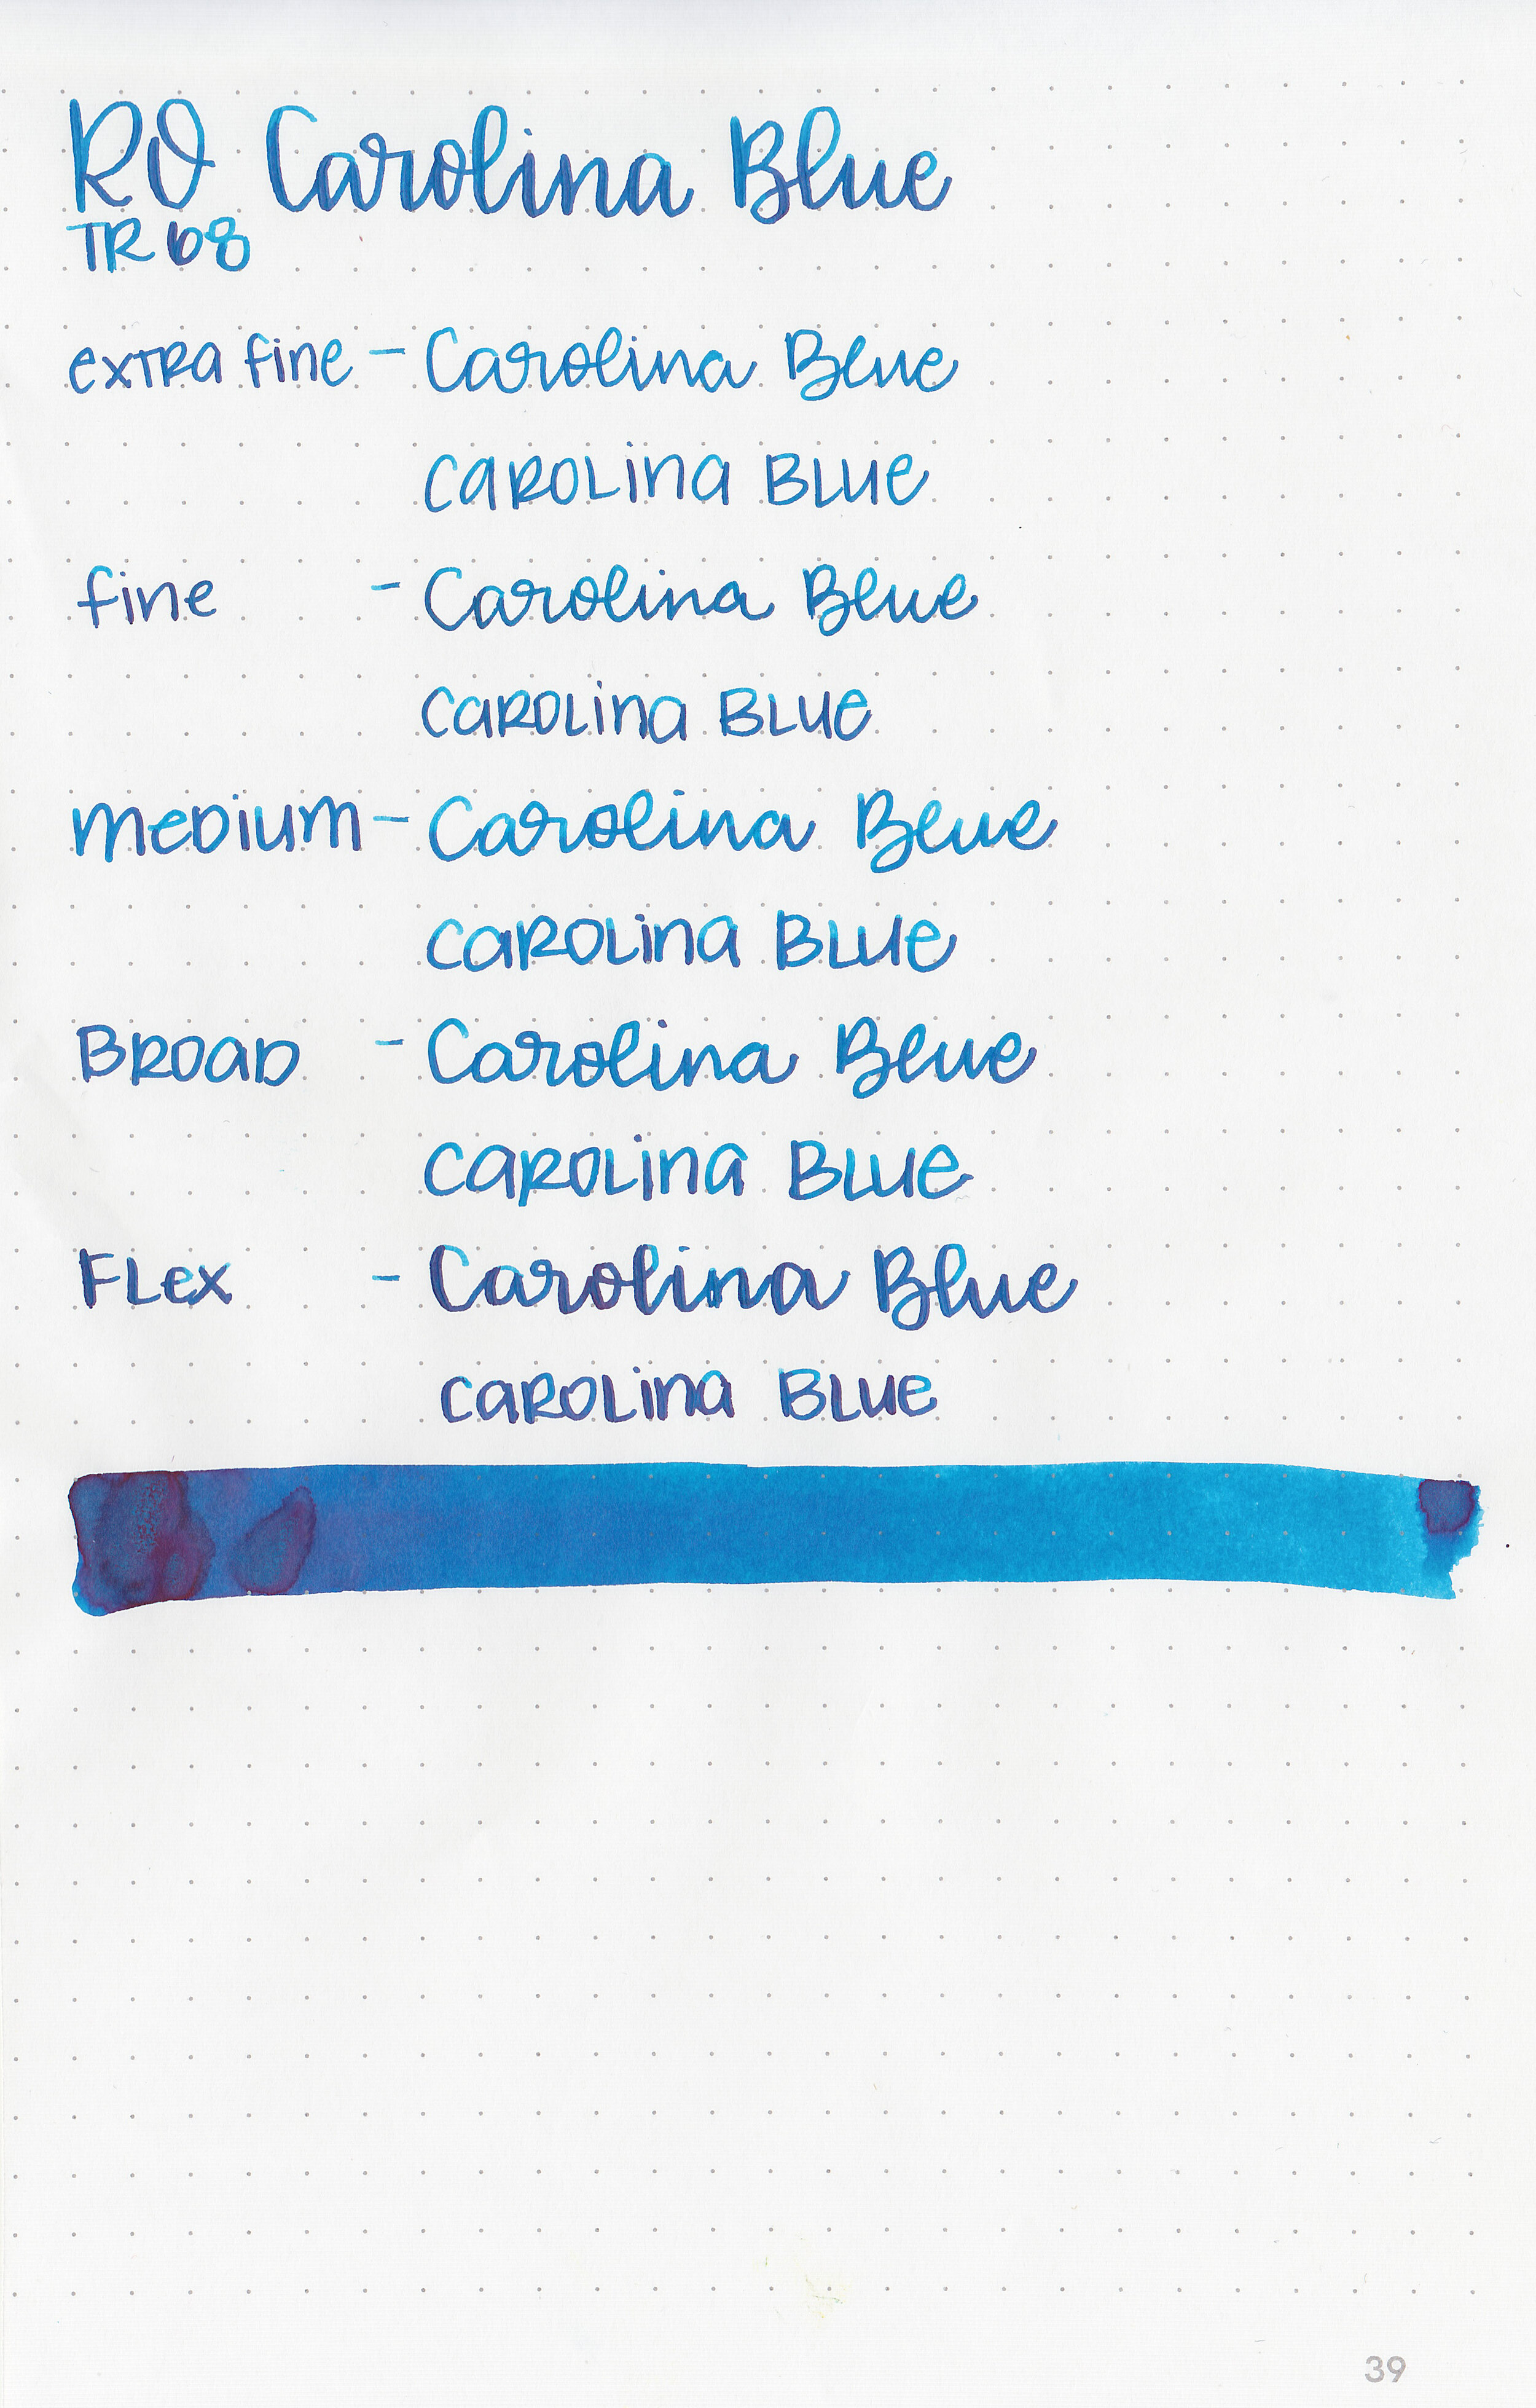 ro-carolina-blue-7.jpg